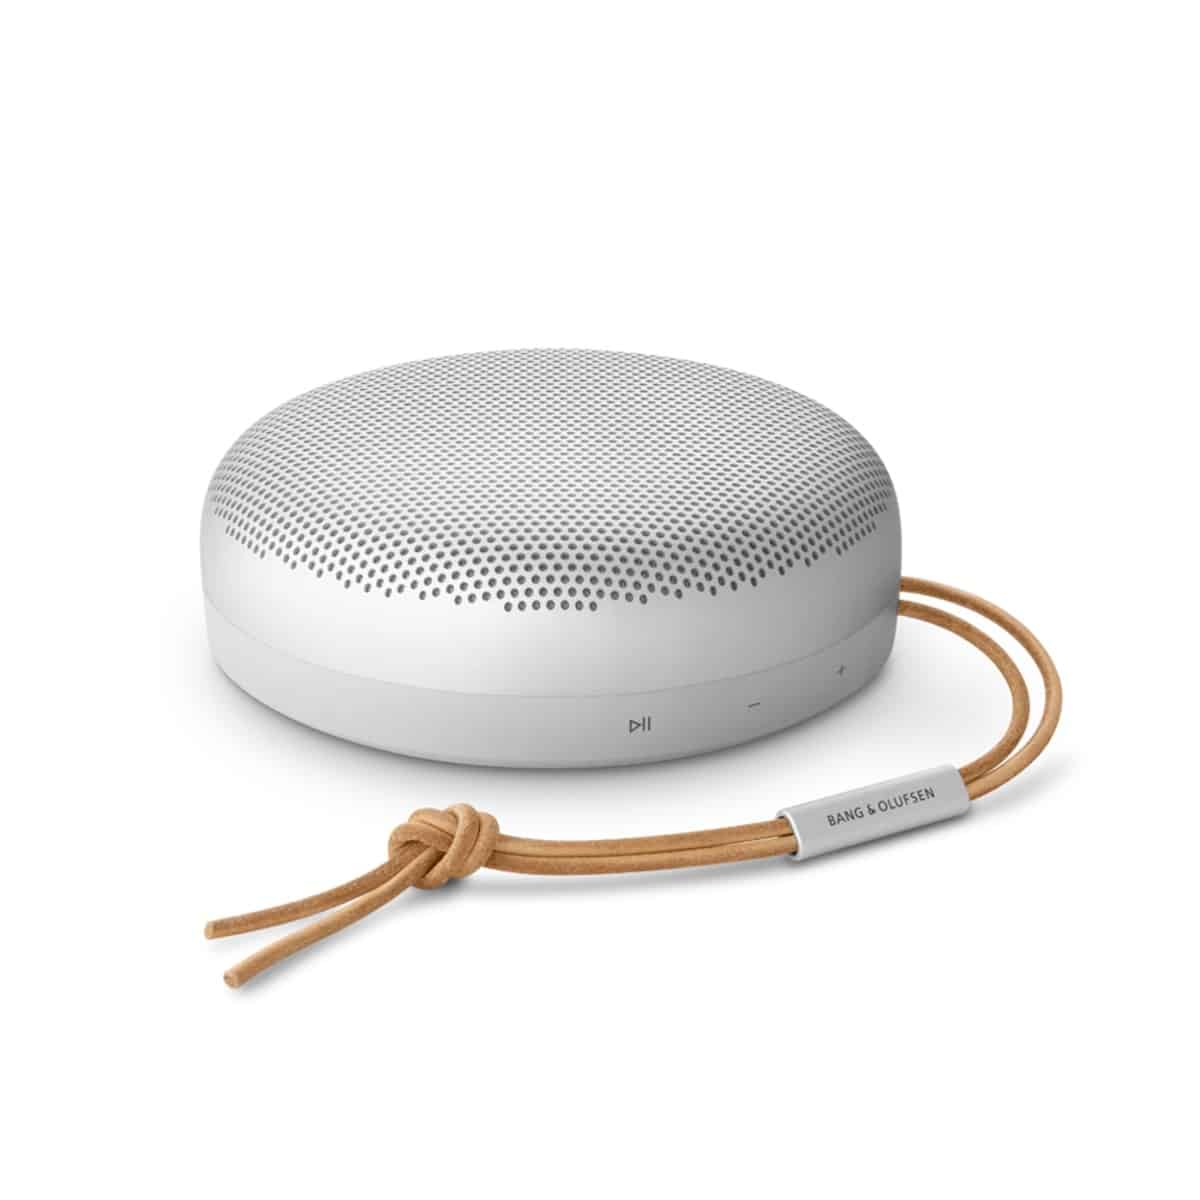 Bang & Olufsen Beosound A1 (2nd Generation) Wireless Portable Waterproof Bluetooth Speaker with Microphone, Grey Mist